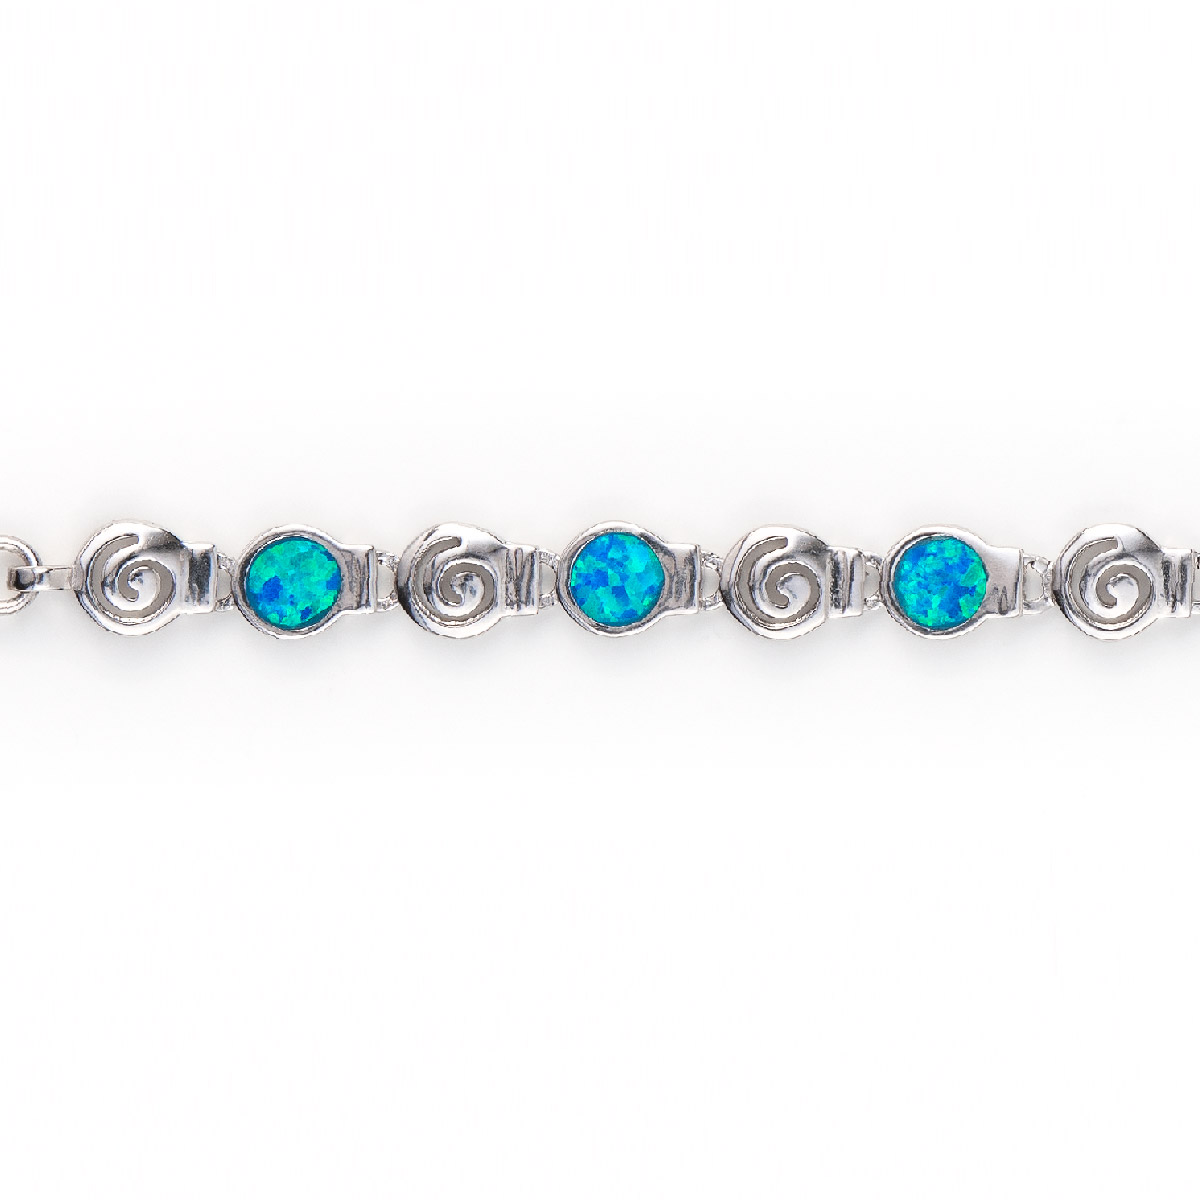 Spiral Bracelet - 925 Sterling Silver with Opal